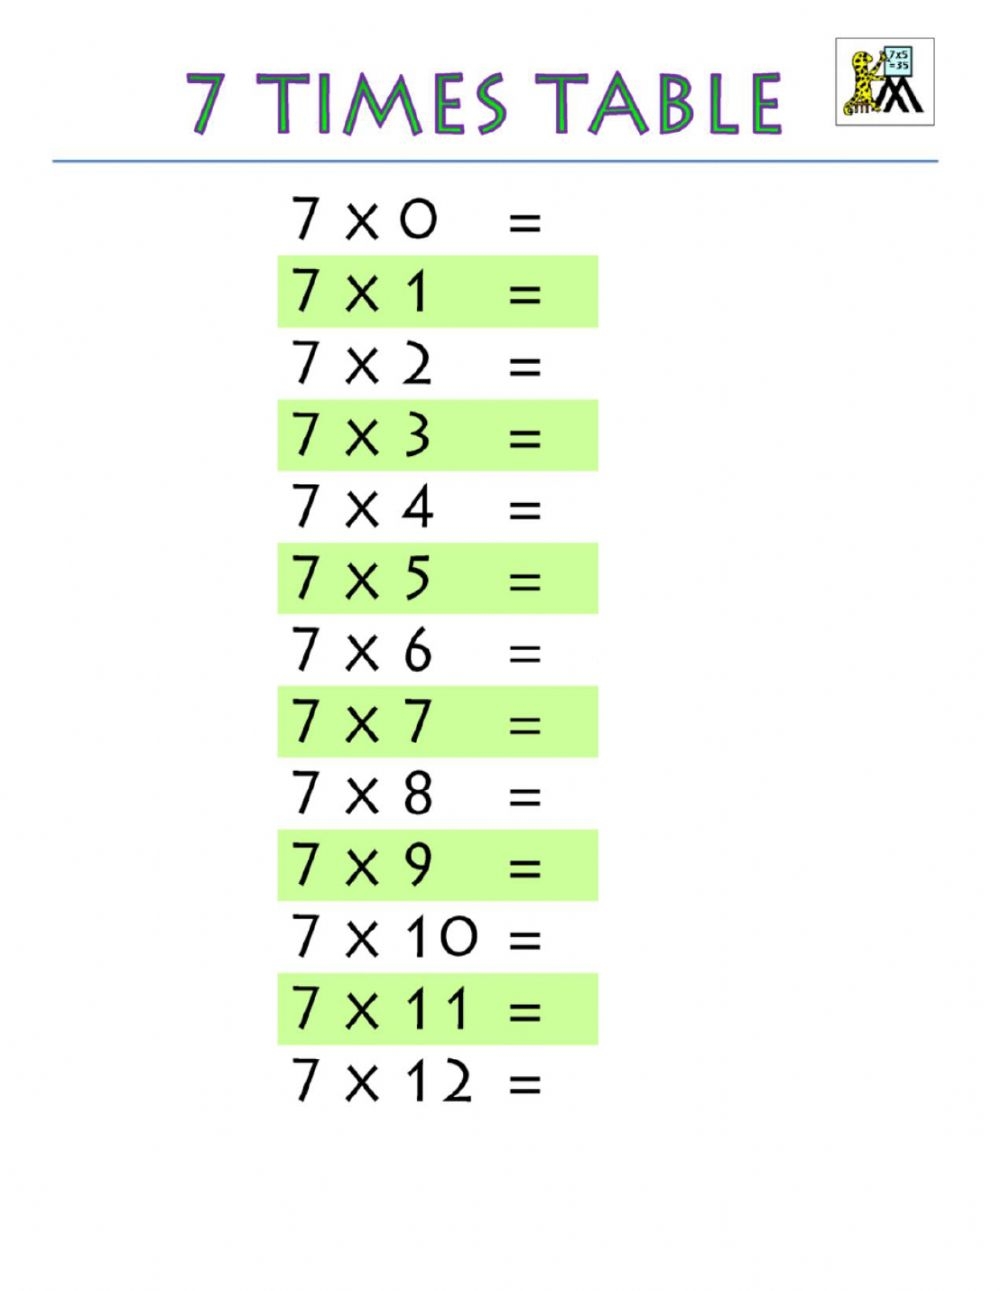 Multiply By 7 s Worksheet